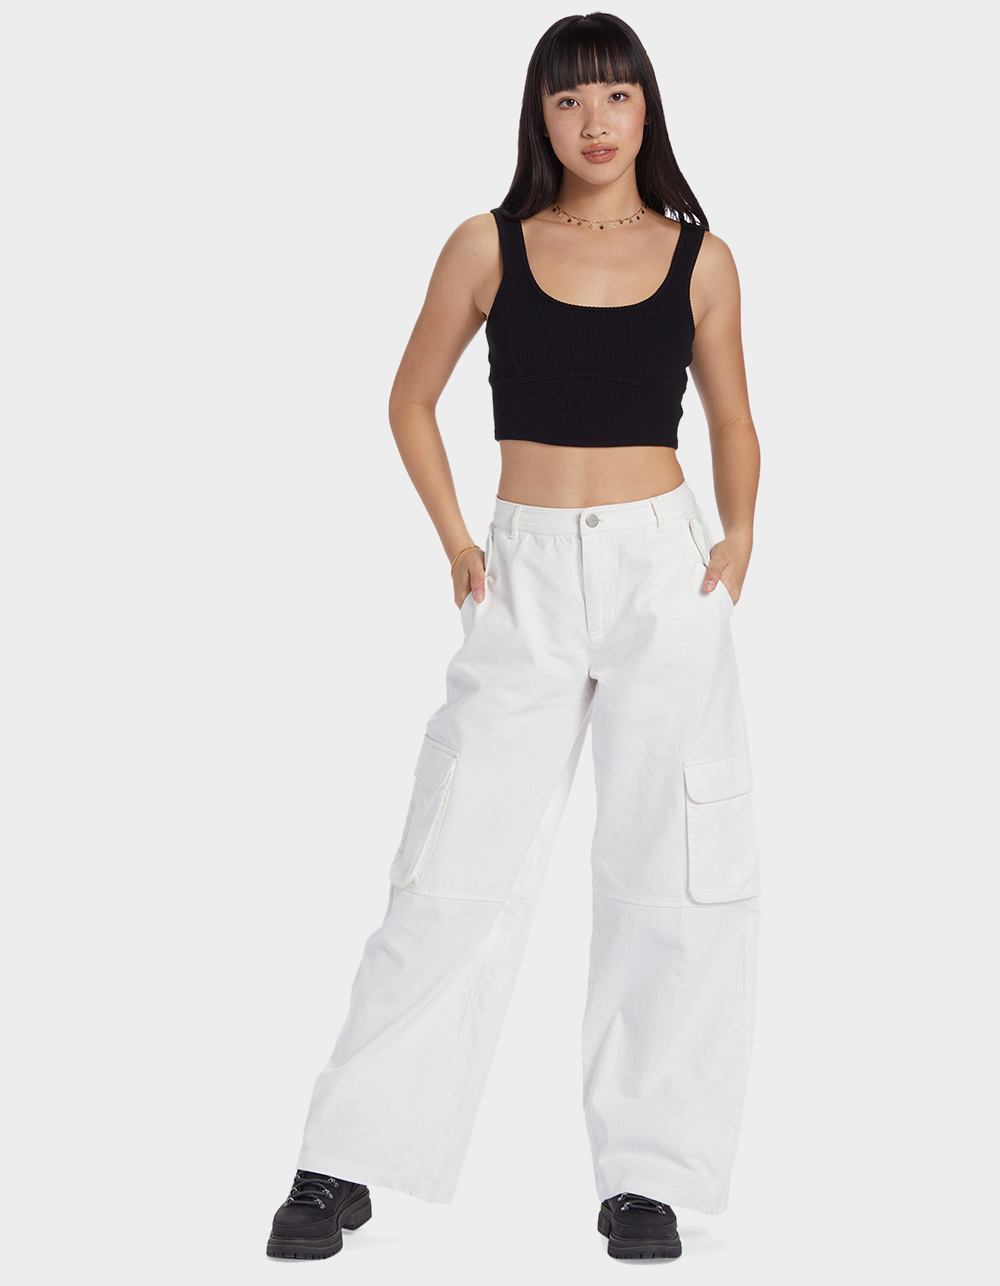 ROXY x Chloe Kim Womens Cargo Pants - WHITE | Tillys